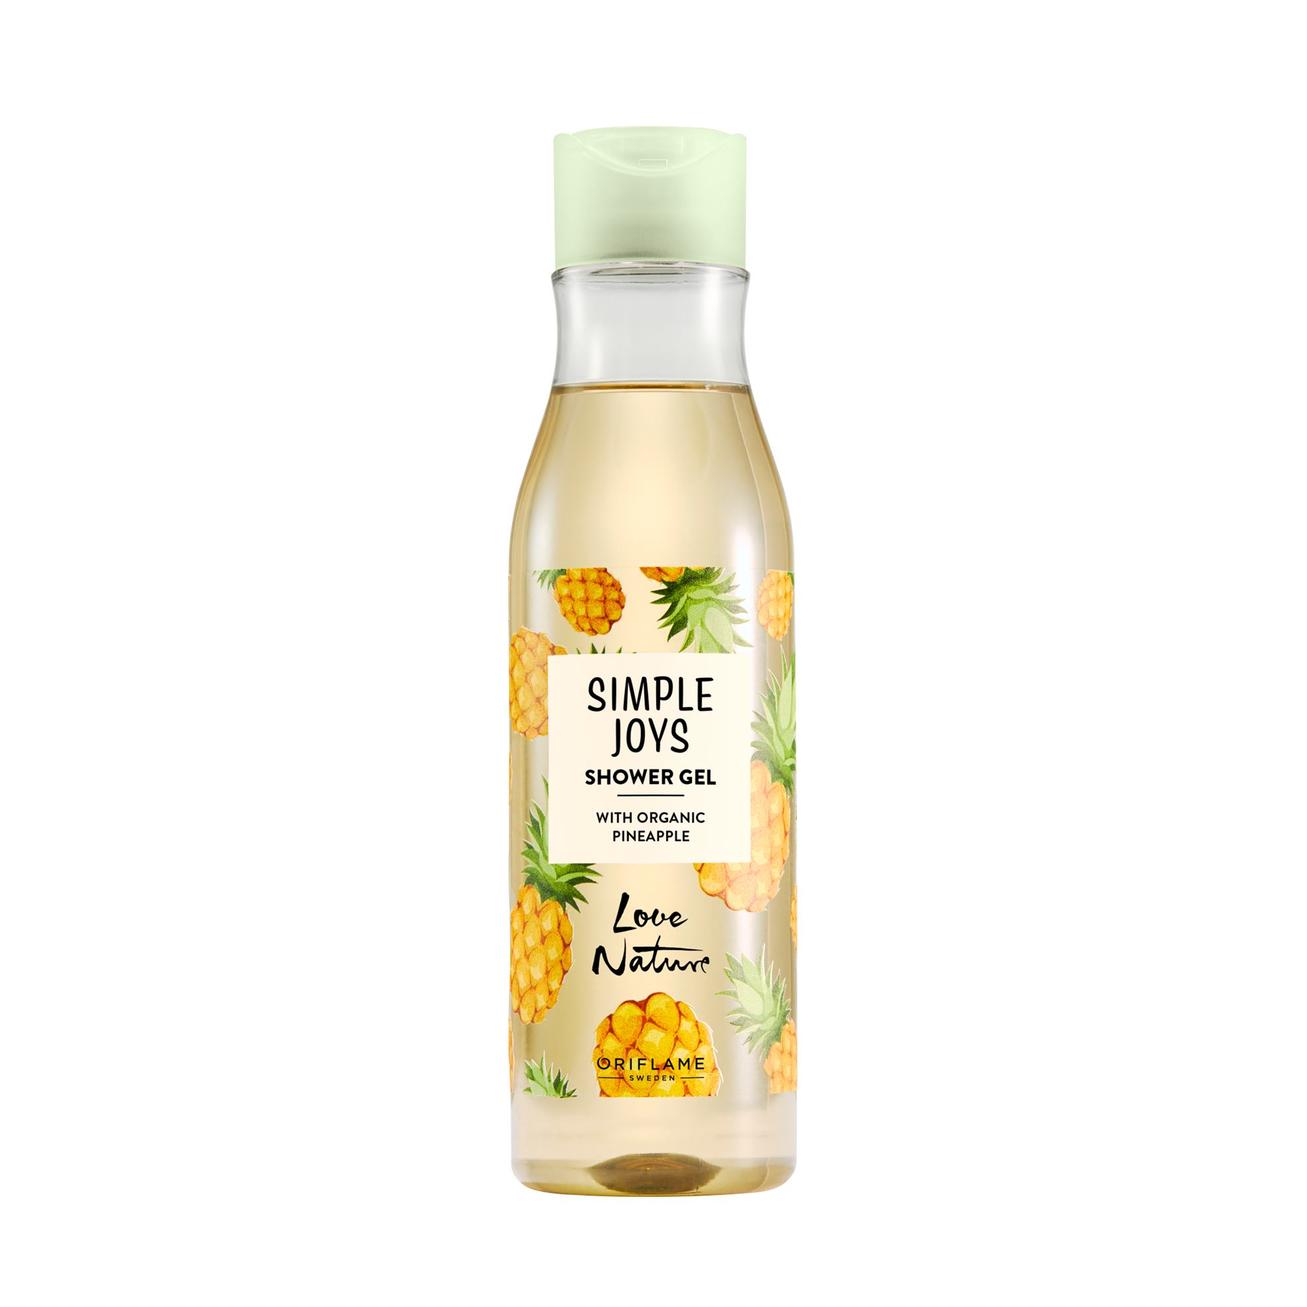 Aanbieding van Simple Joys Shower Gel with Organic Pineapple Love Nature voor 8,5€ bij Oriflame